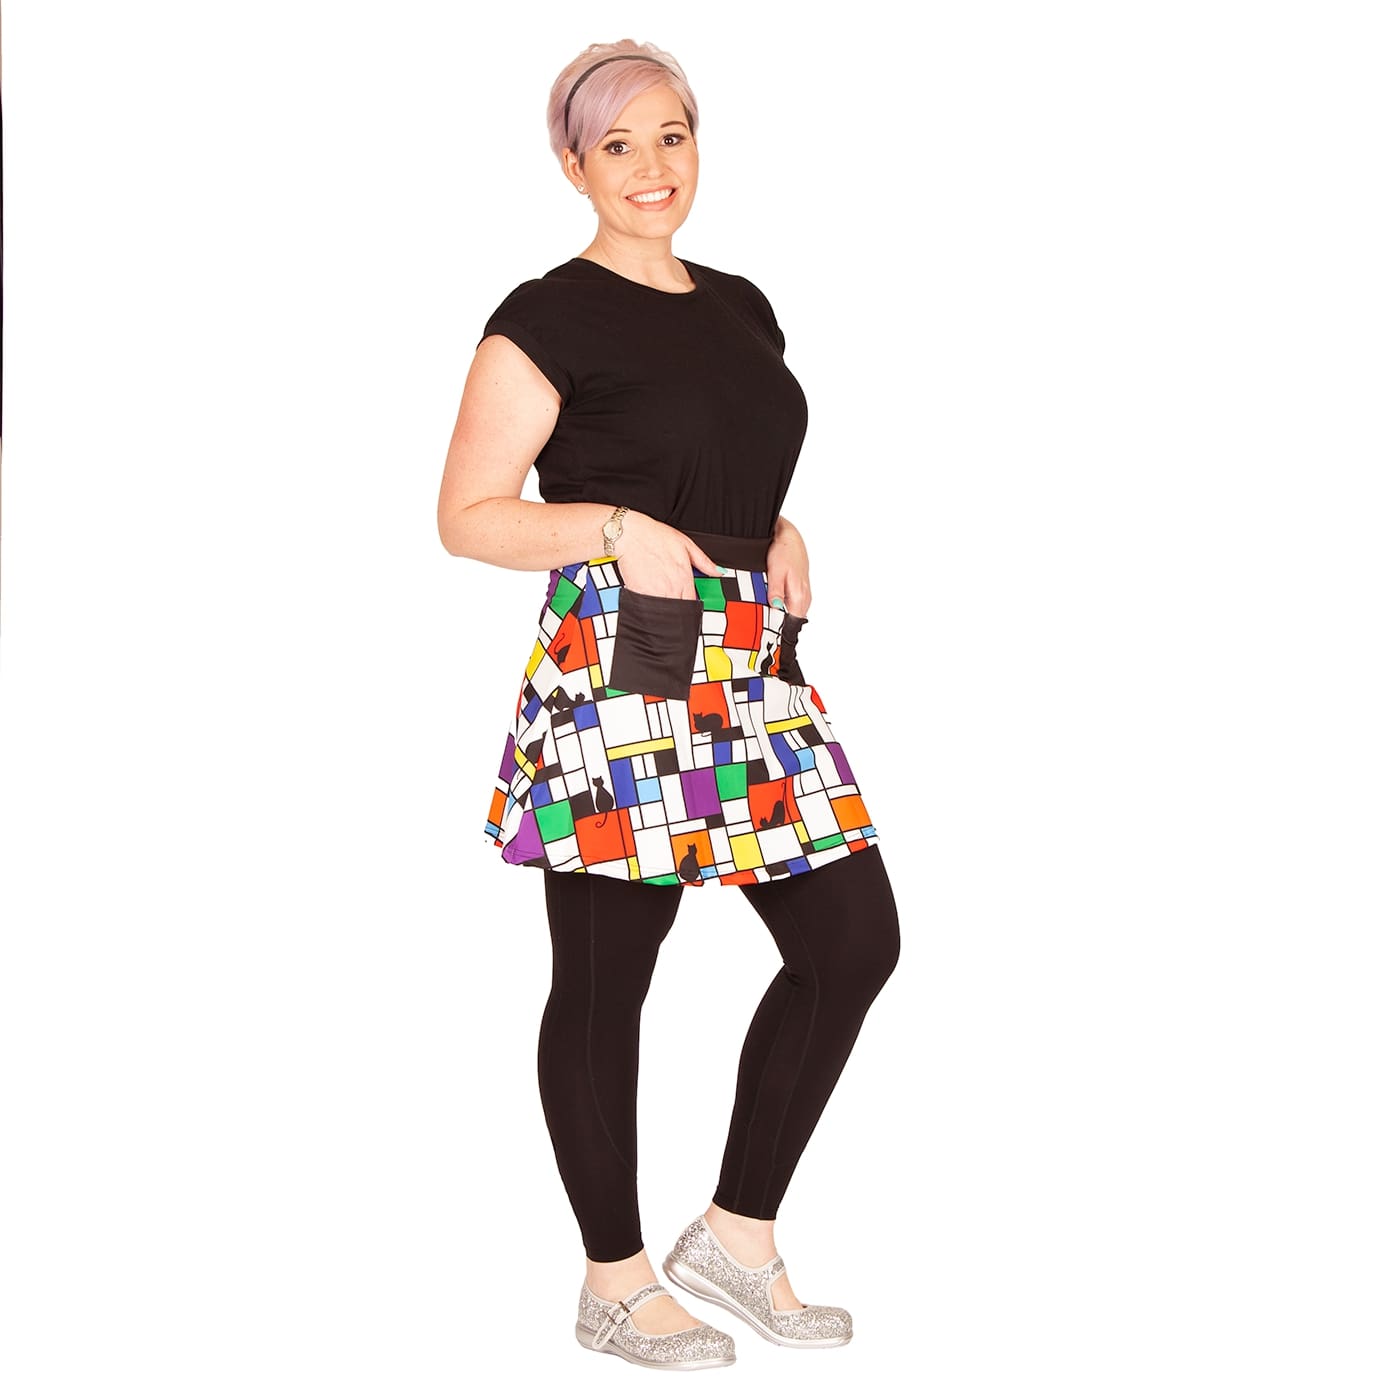 Intrigue Short Skirt by RainbowsAndFairies.com (Black Cat - Mondrian Art - Skirt With Pockets - Aline Skirt - Party Food) - SKU: CL_SHORT_INTRG_ORG - 04